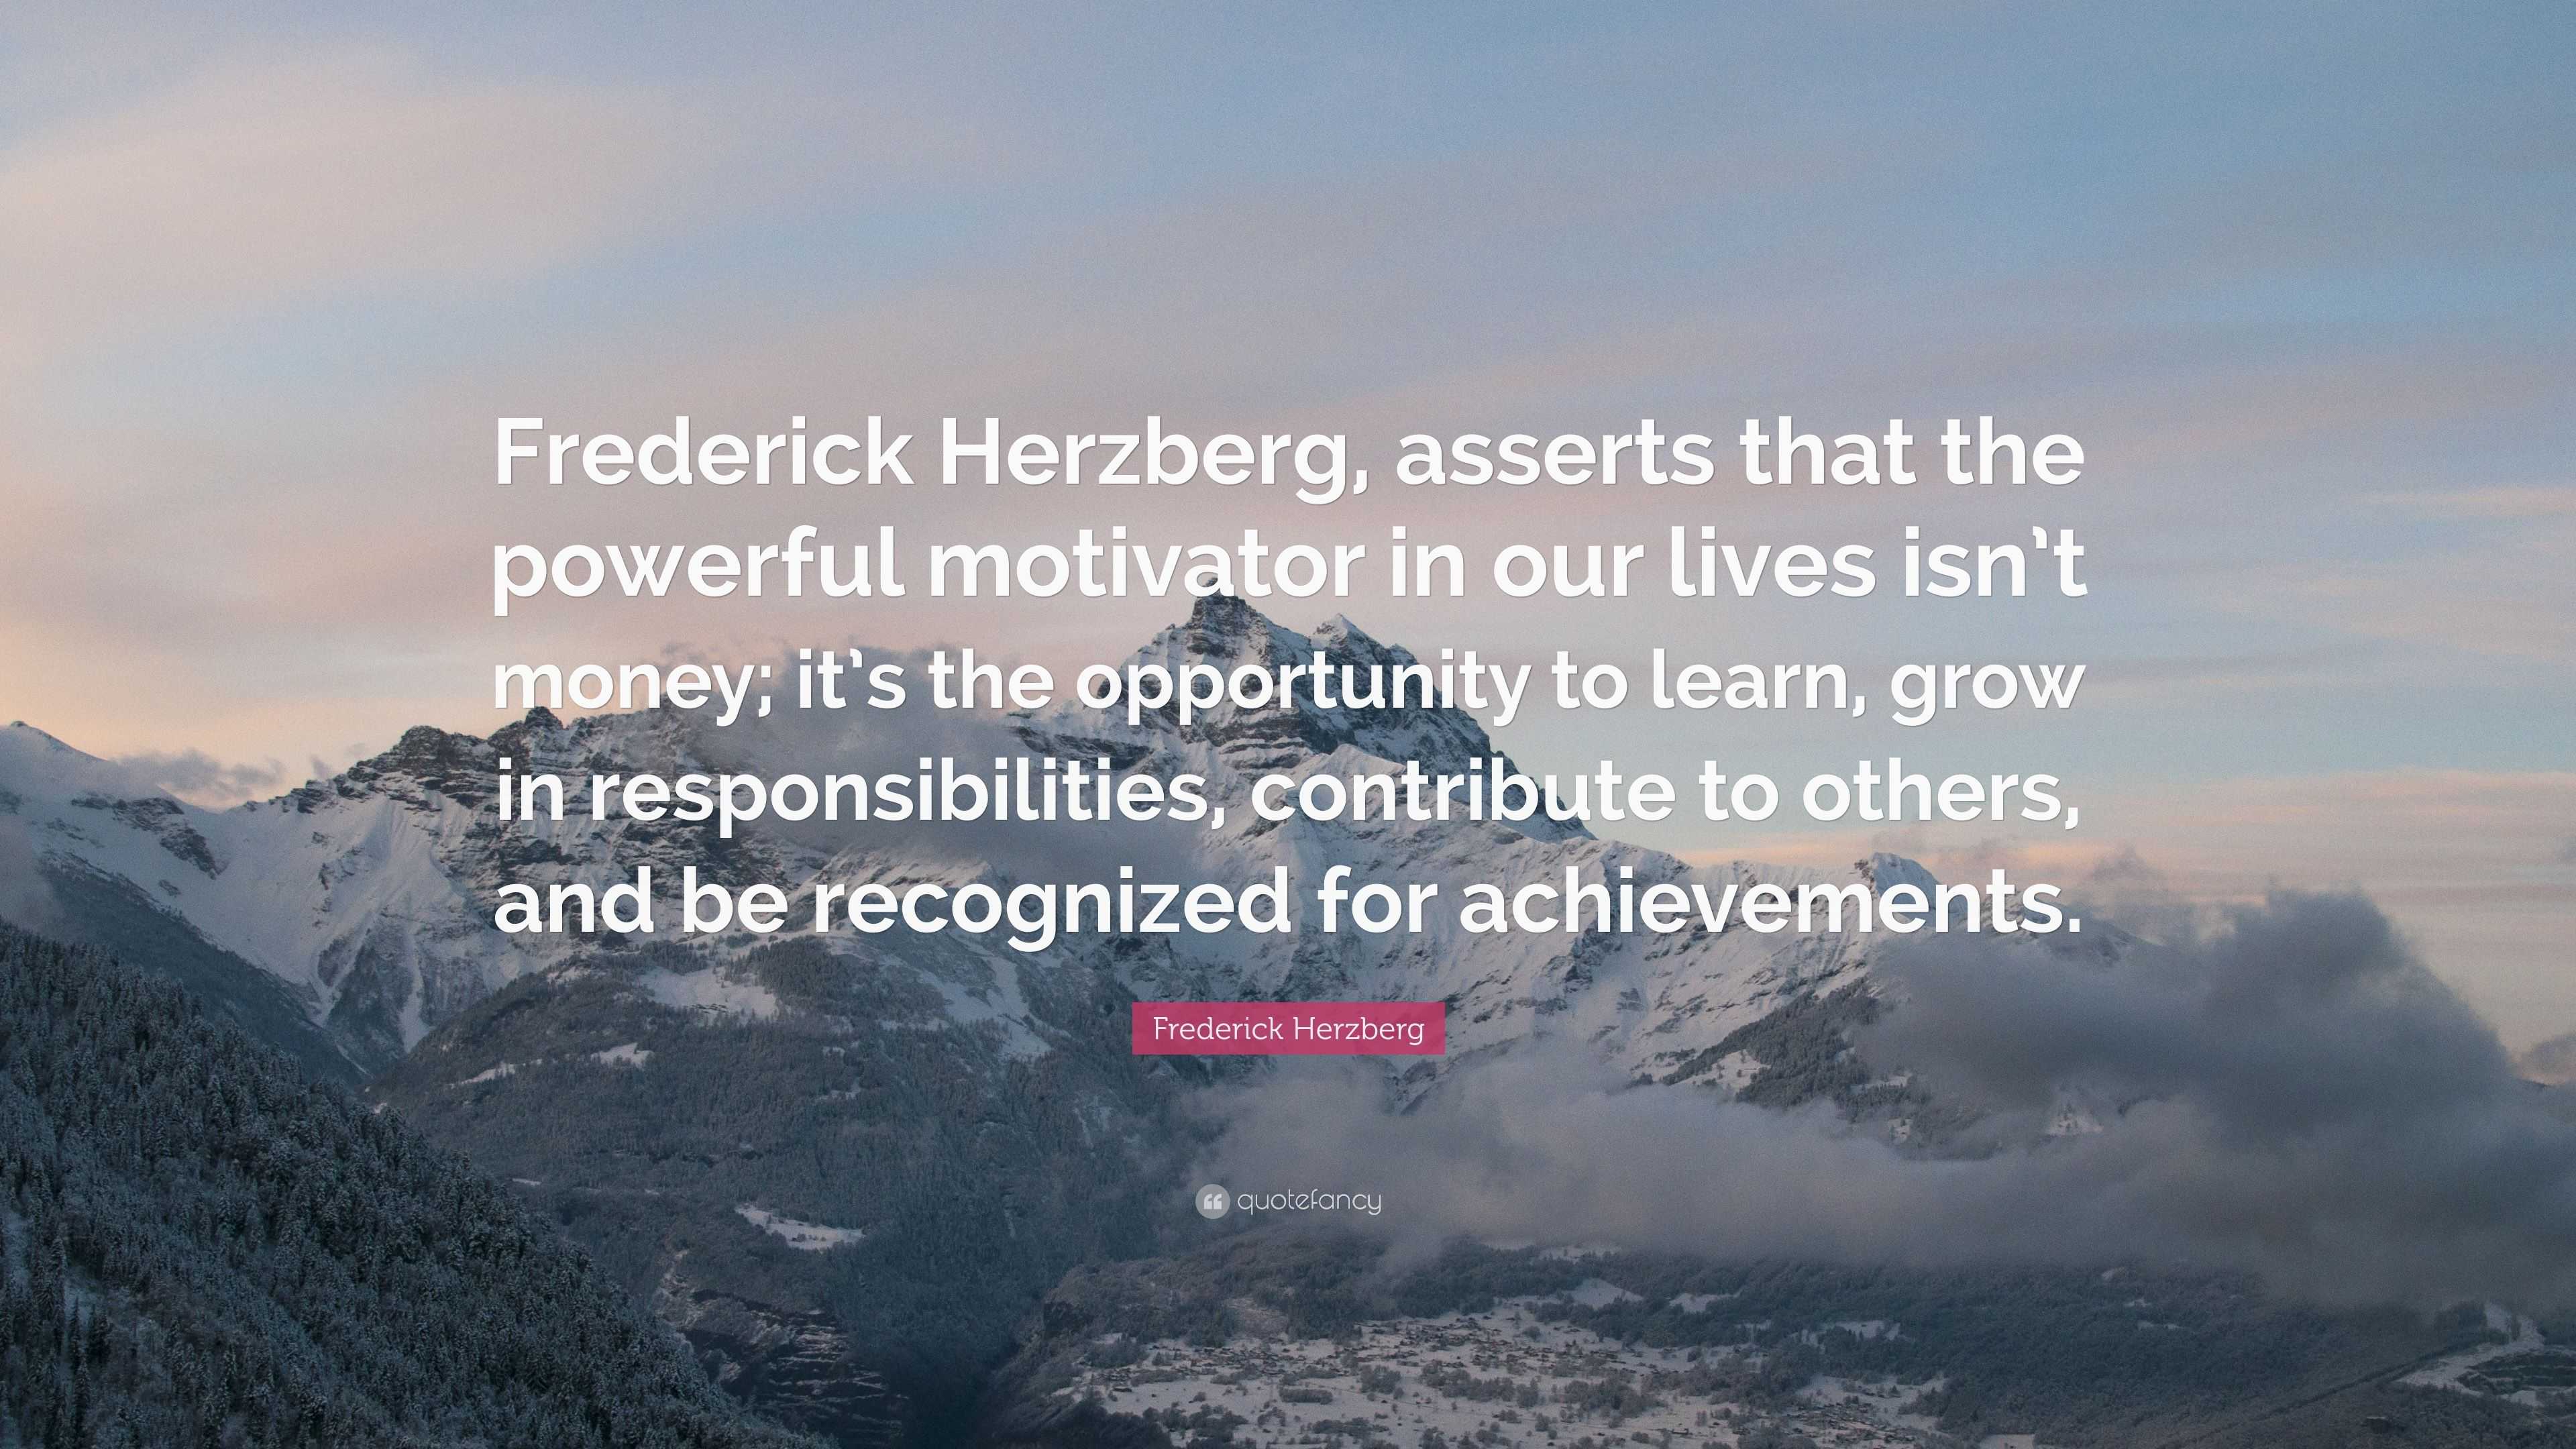 Frederick Herzberg Quote: “Frederick Herzberg, asserts that the